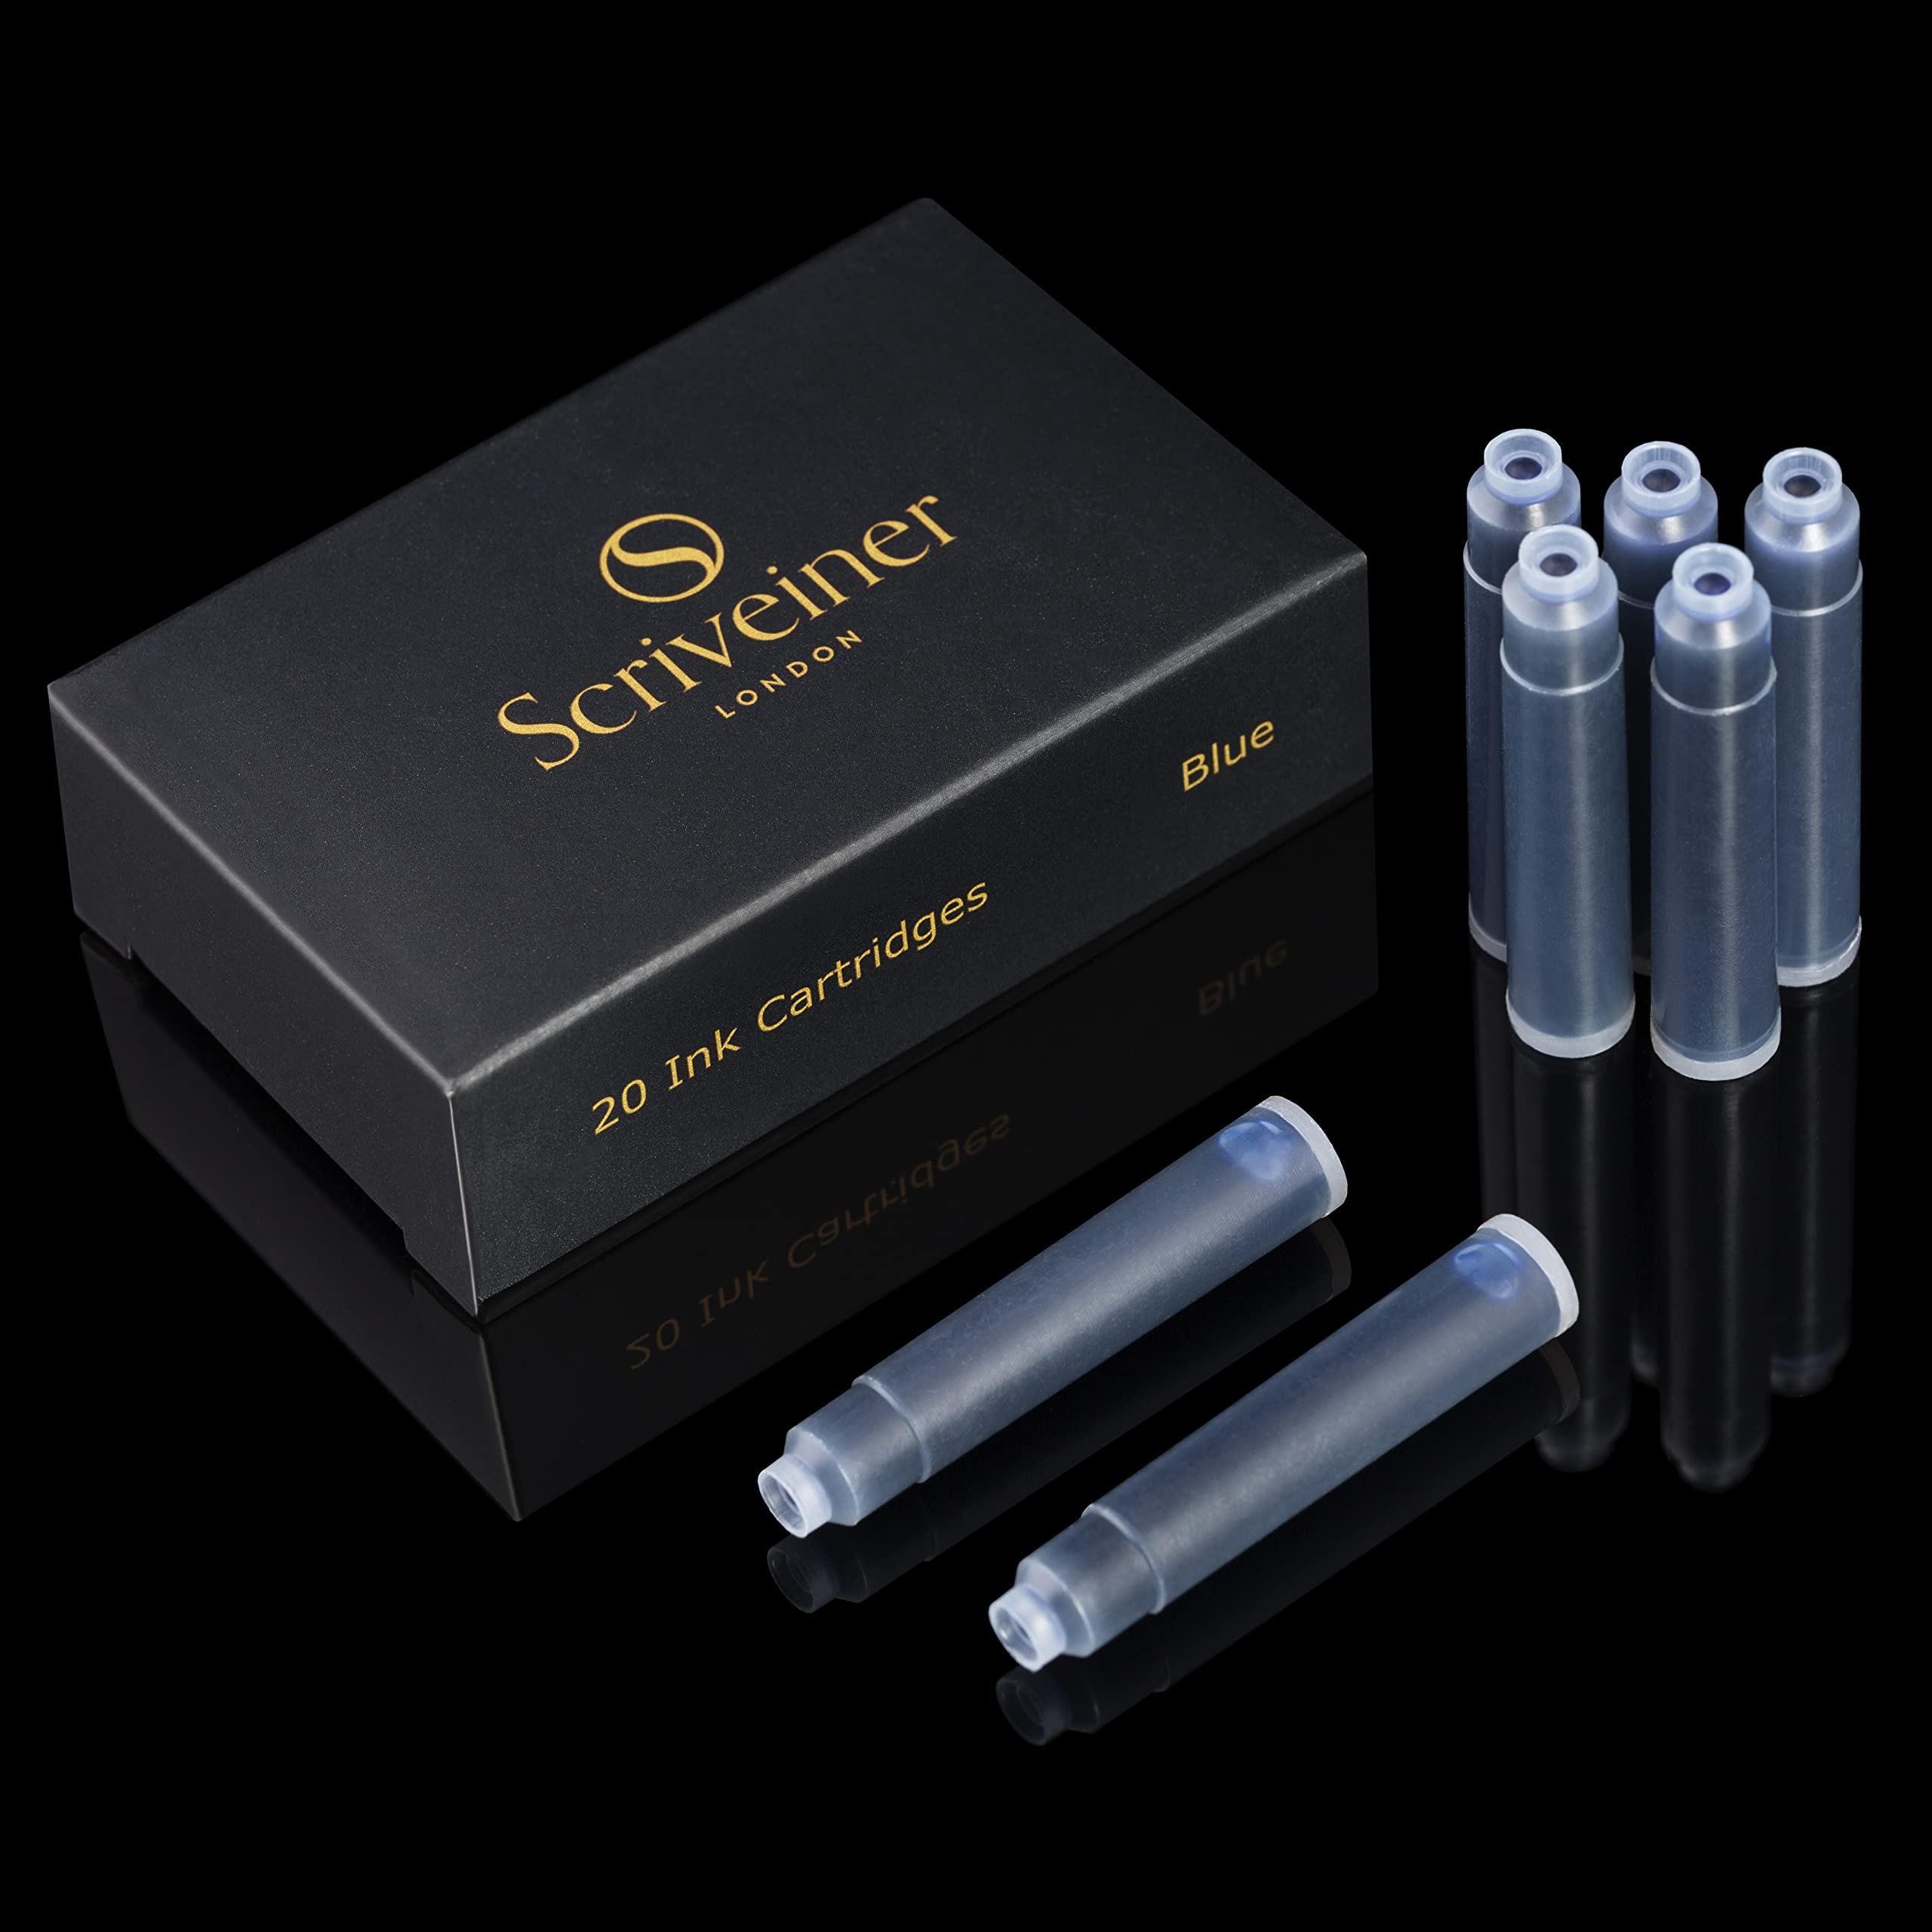 Scriveiner Fountain Pen Ink Cartridges - Blue - 20 Standard International Ink Cartridges, Made in UK